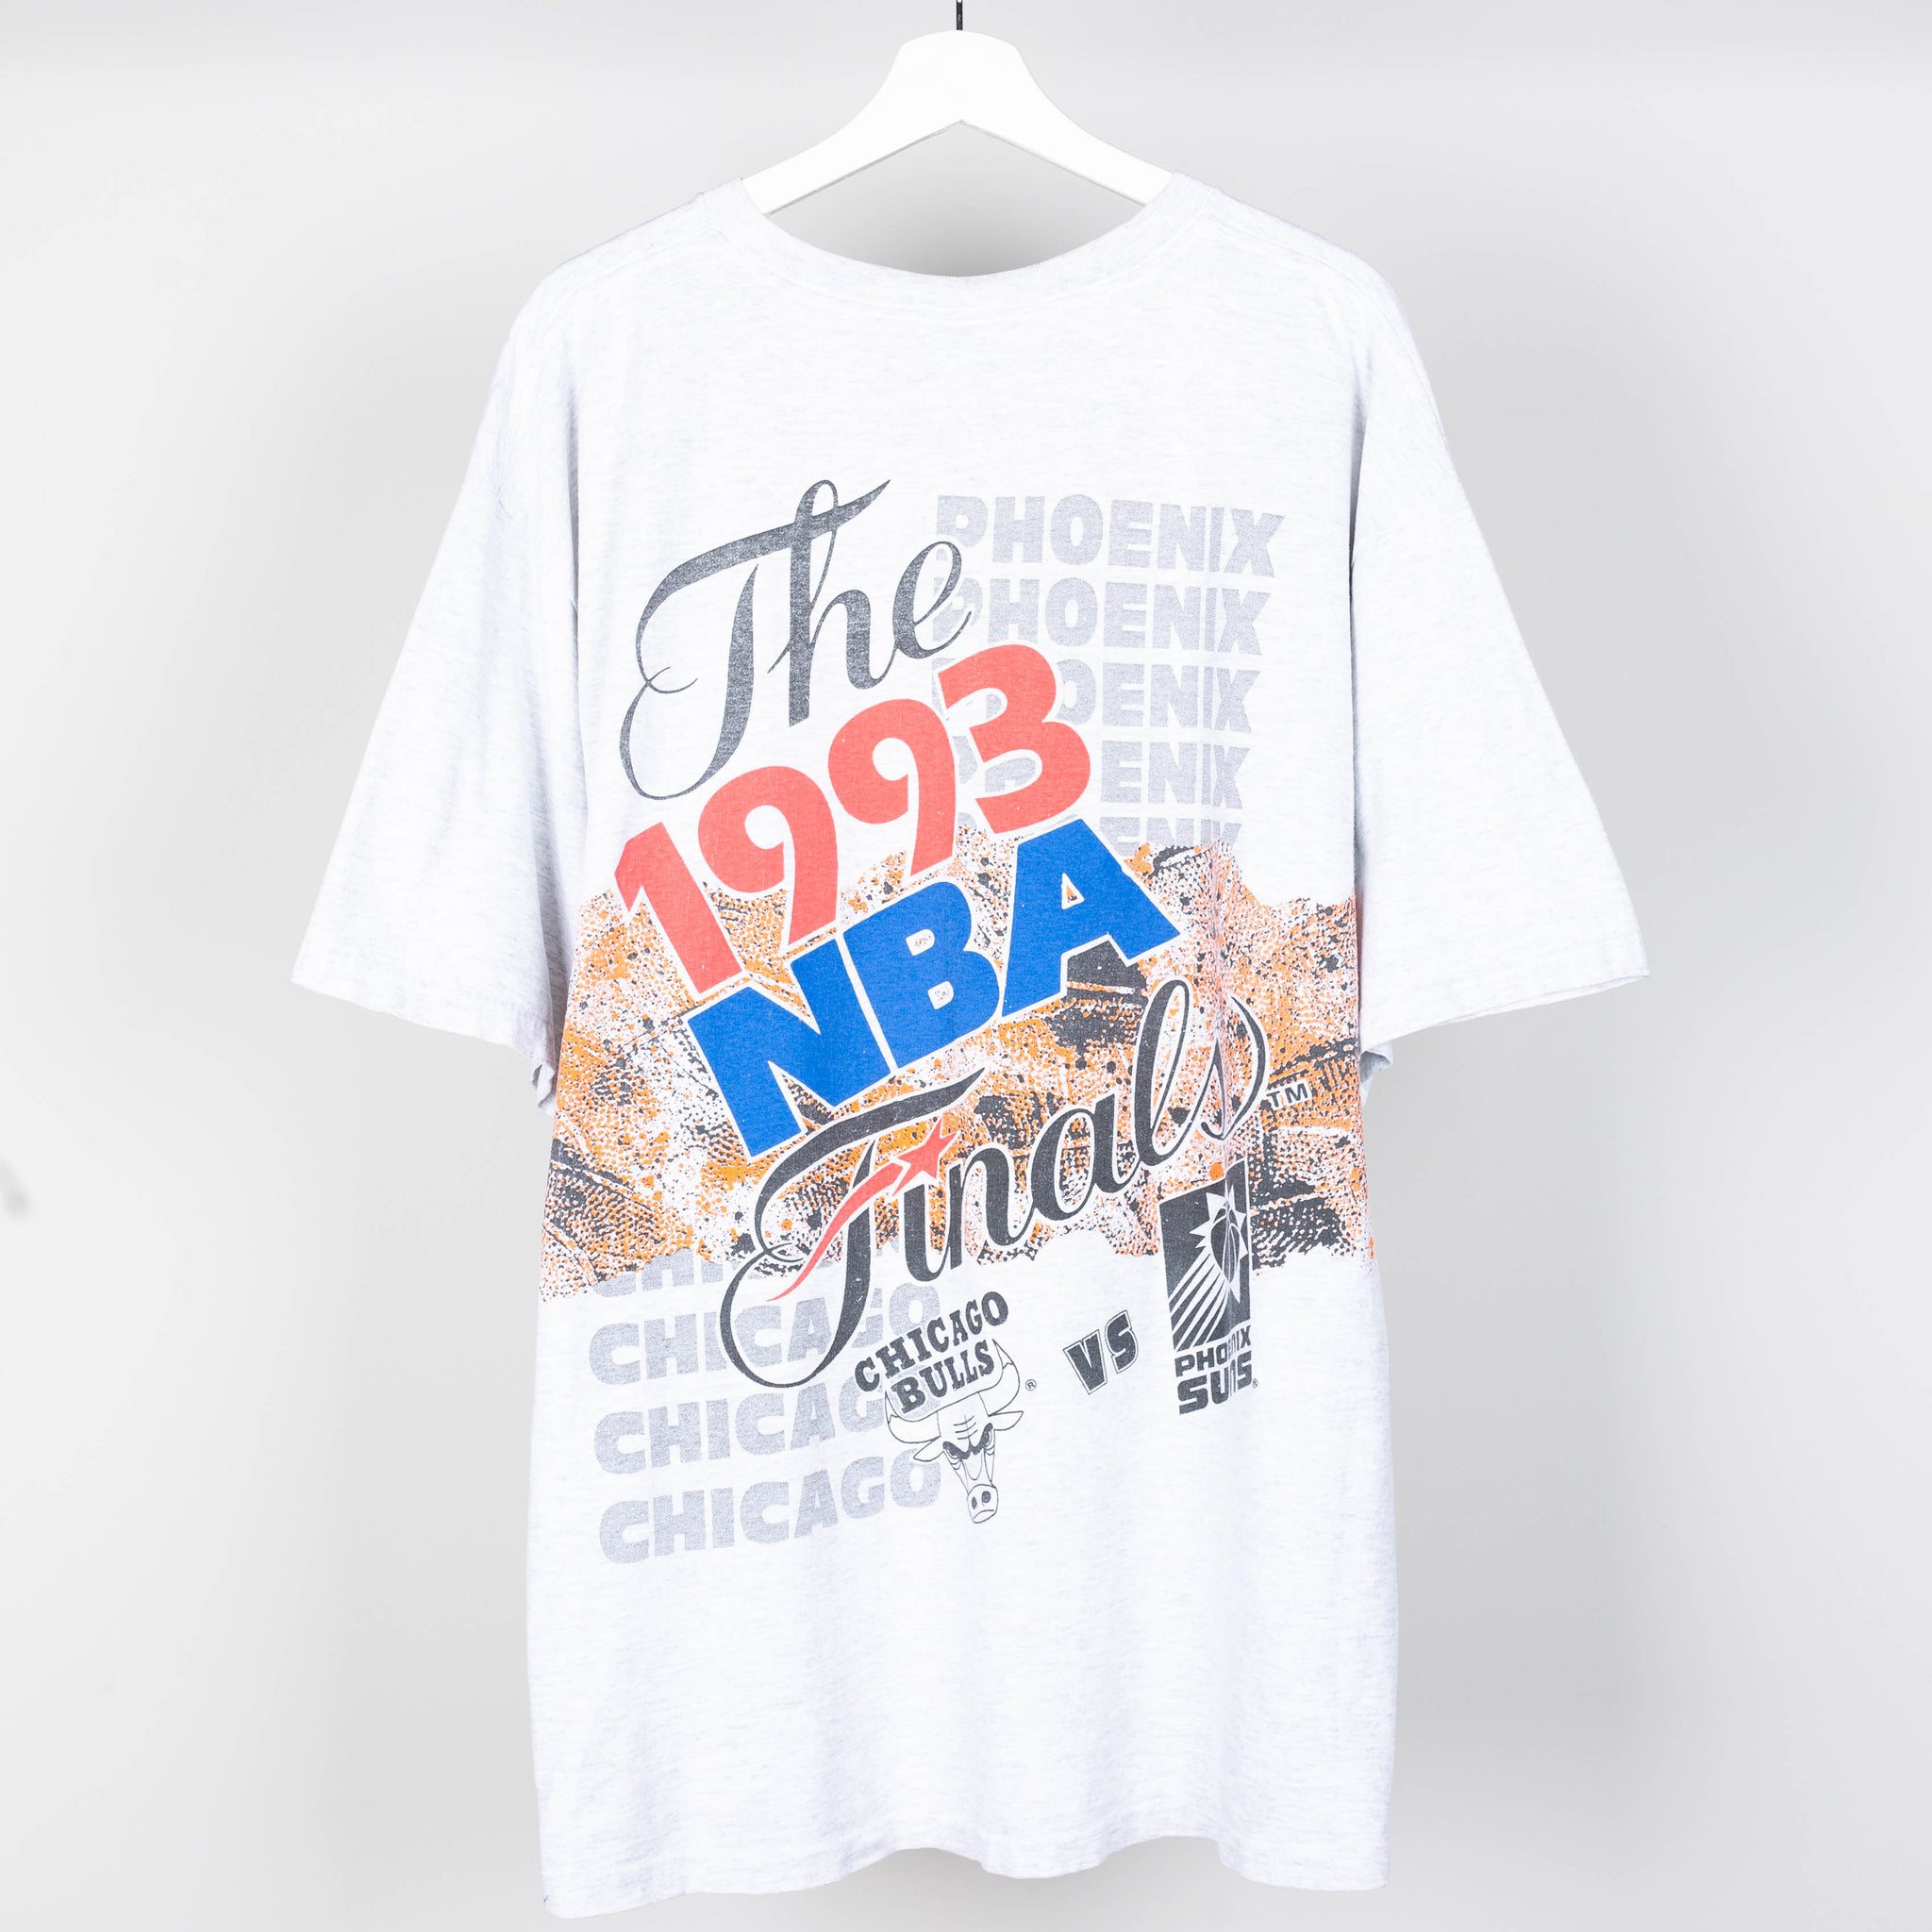 Phoenix Suns 1993 Game Over Tee Unisex